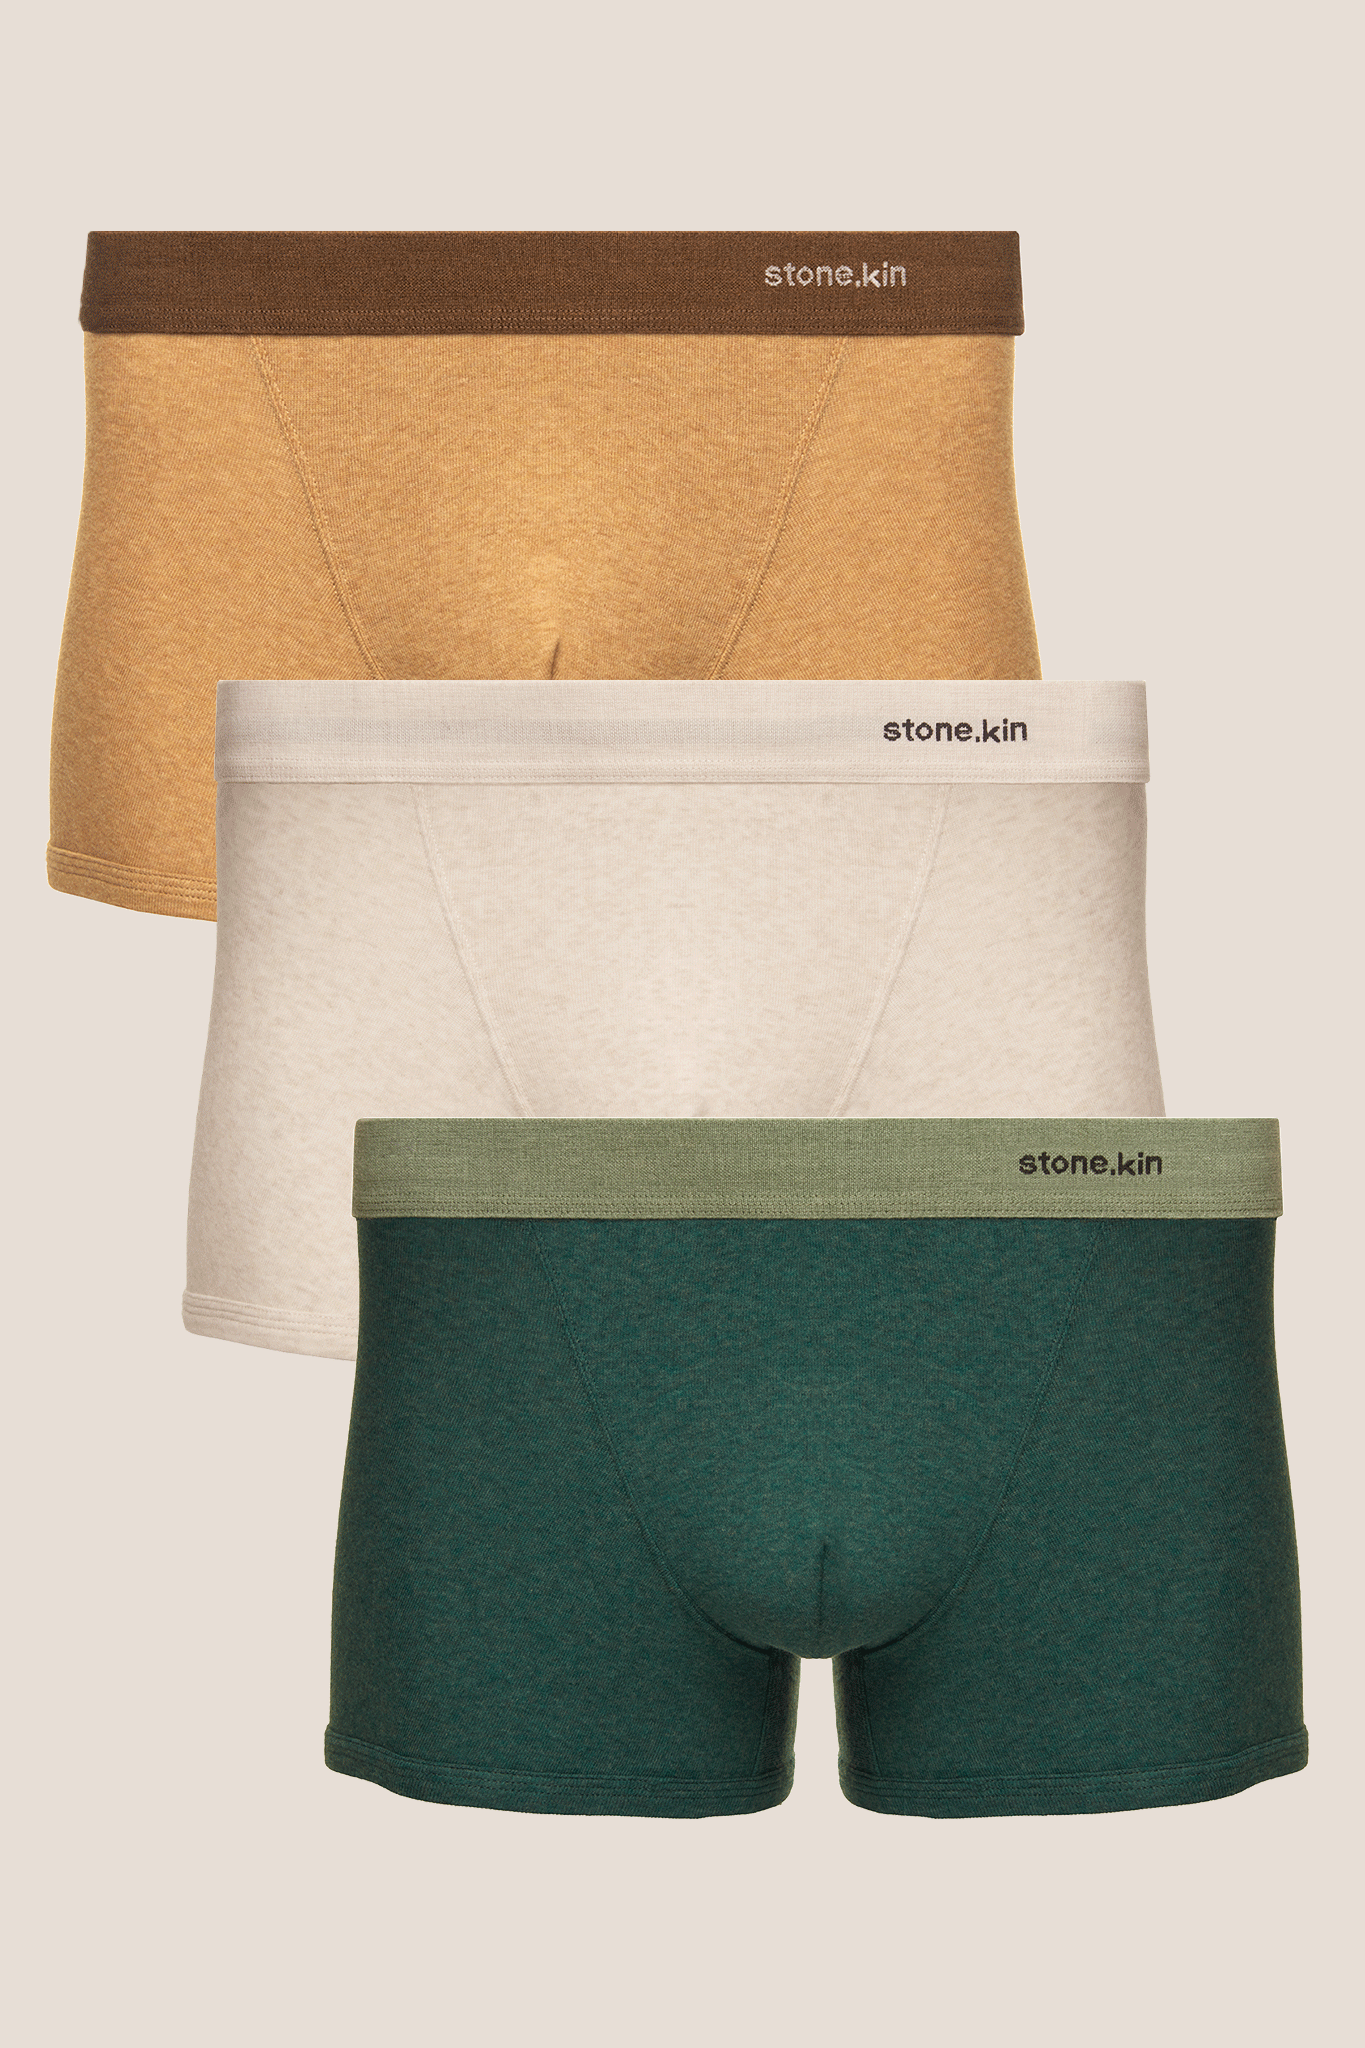 Women’s and Men’s underwear by Stone.kin – Soft, Comfortable Organic Cotton Underwear – Men’s Boxer Briefs, Men’s Trunks, Men’s Briefs, Women’s Bodysuits, Women’s Briefs, Women’s Bralette’s, Women’s Thong, and Women’s G-string’s. 